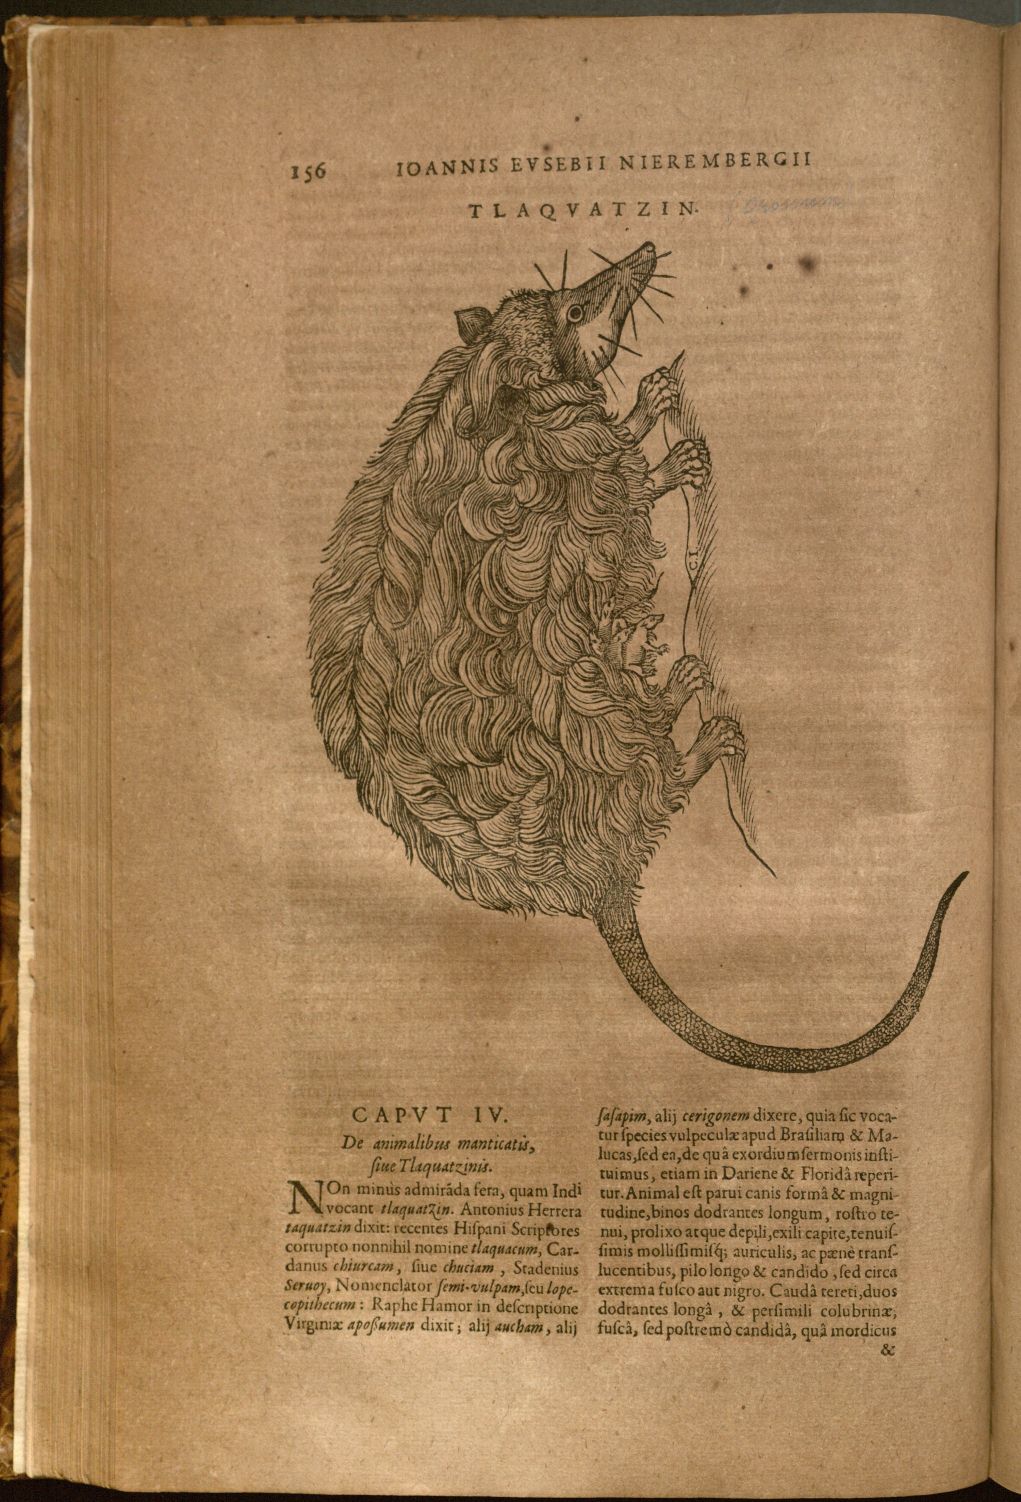 Image of an Opossum from Nieremberg's Historia naturae (1635).